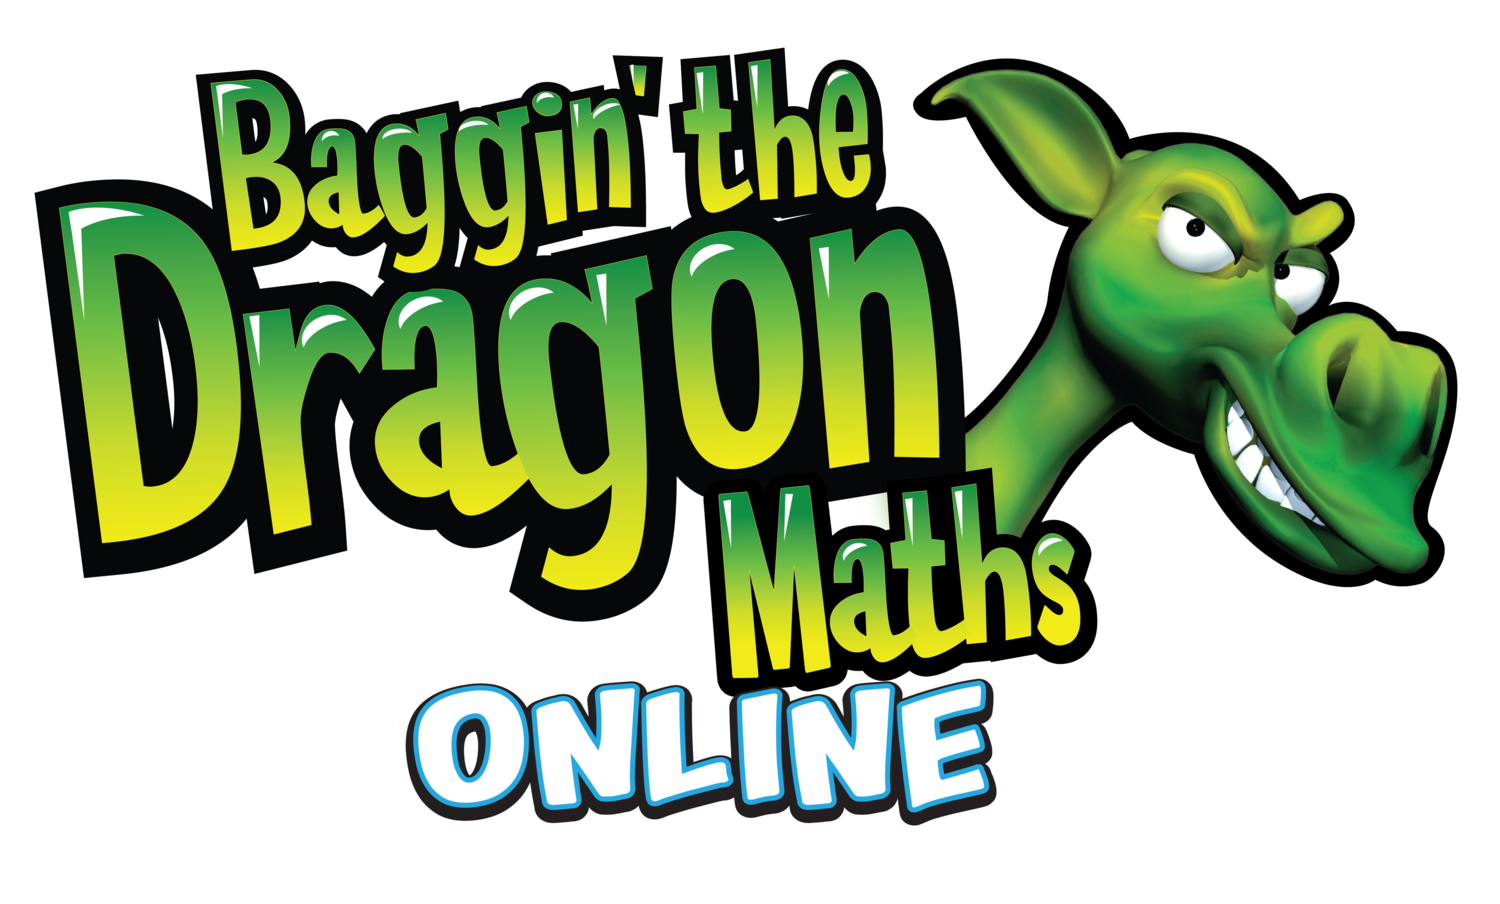 Baggin' The Dragon Online